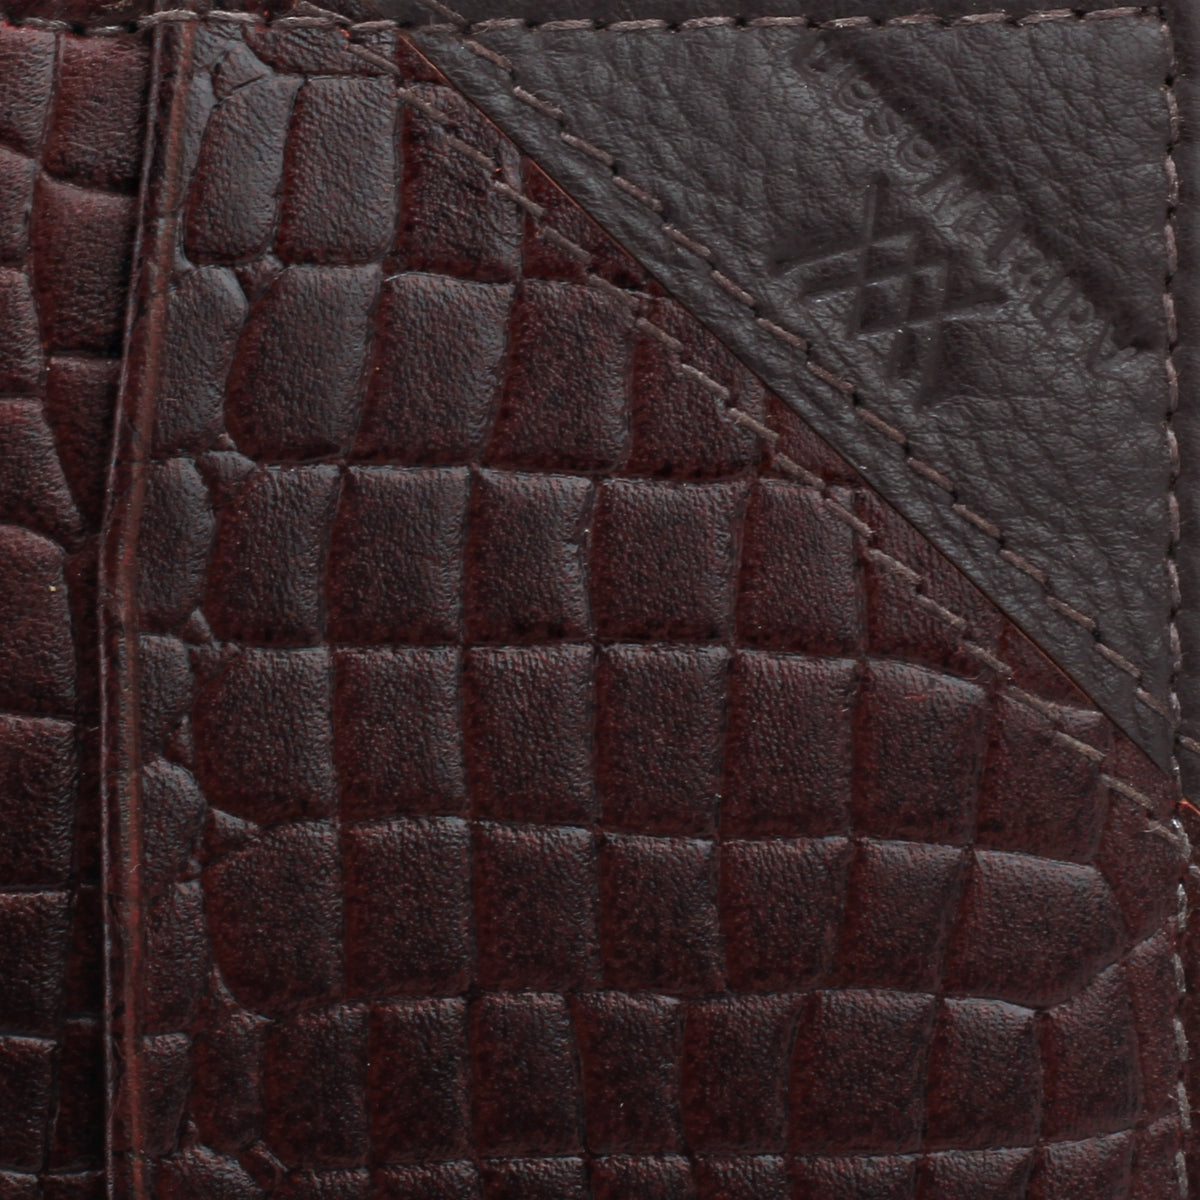 Genuine leather brown croc embossed cardholder